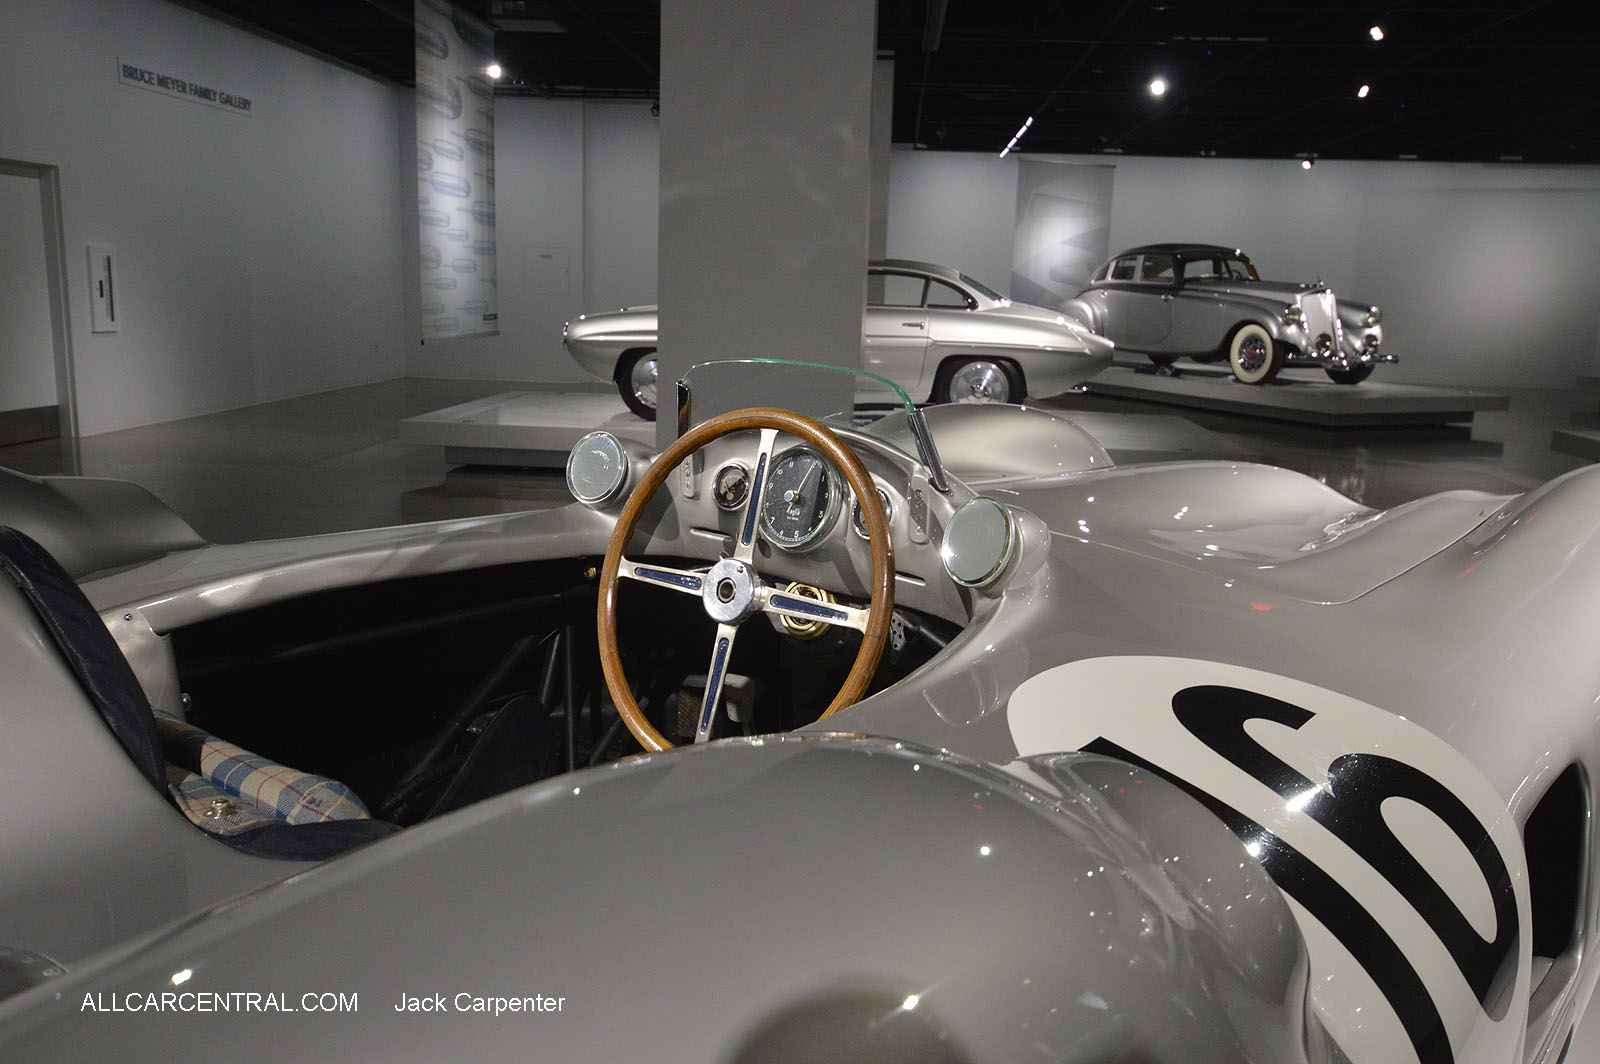   Mercedes-Benz W196 1954  Petersen 
Automotive Museum 2016